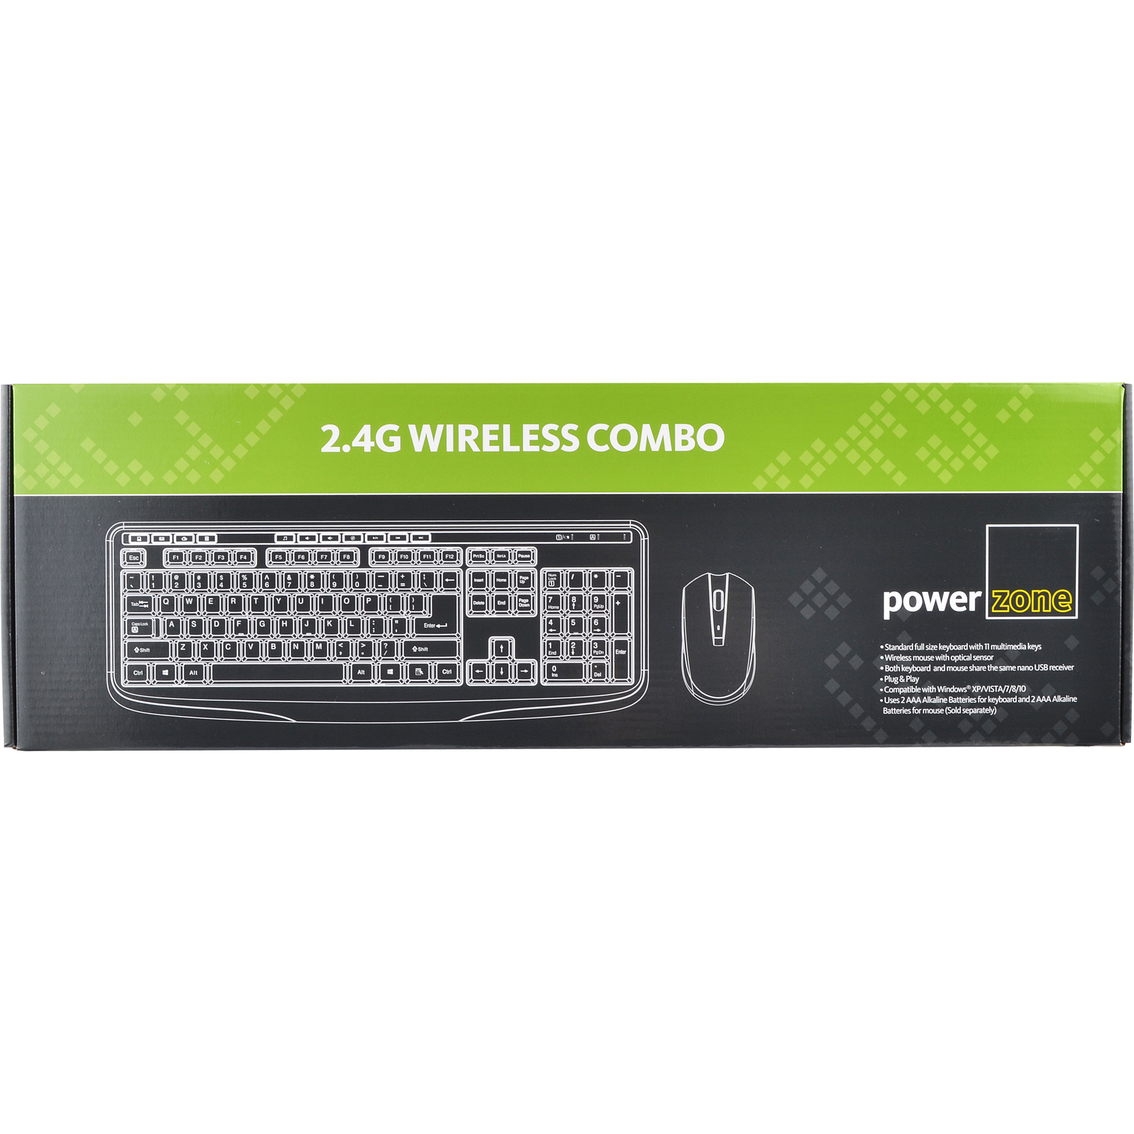 Powerzone 2.4G Wireless Keyboard & Mouse Combo - Image 2 of 2